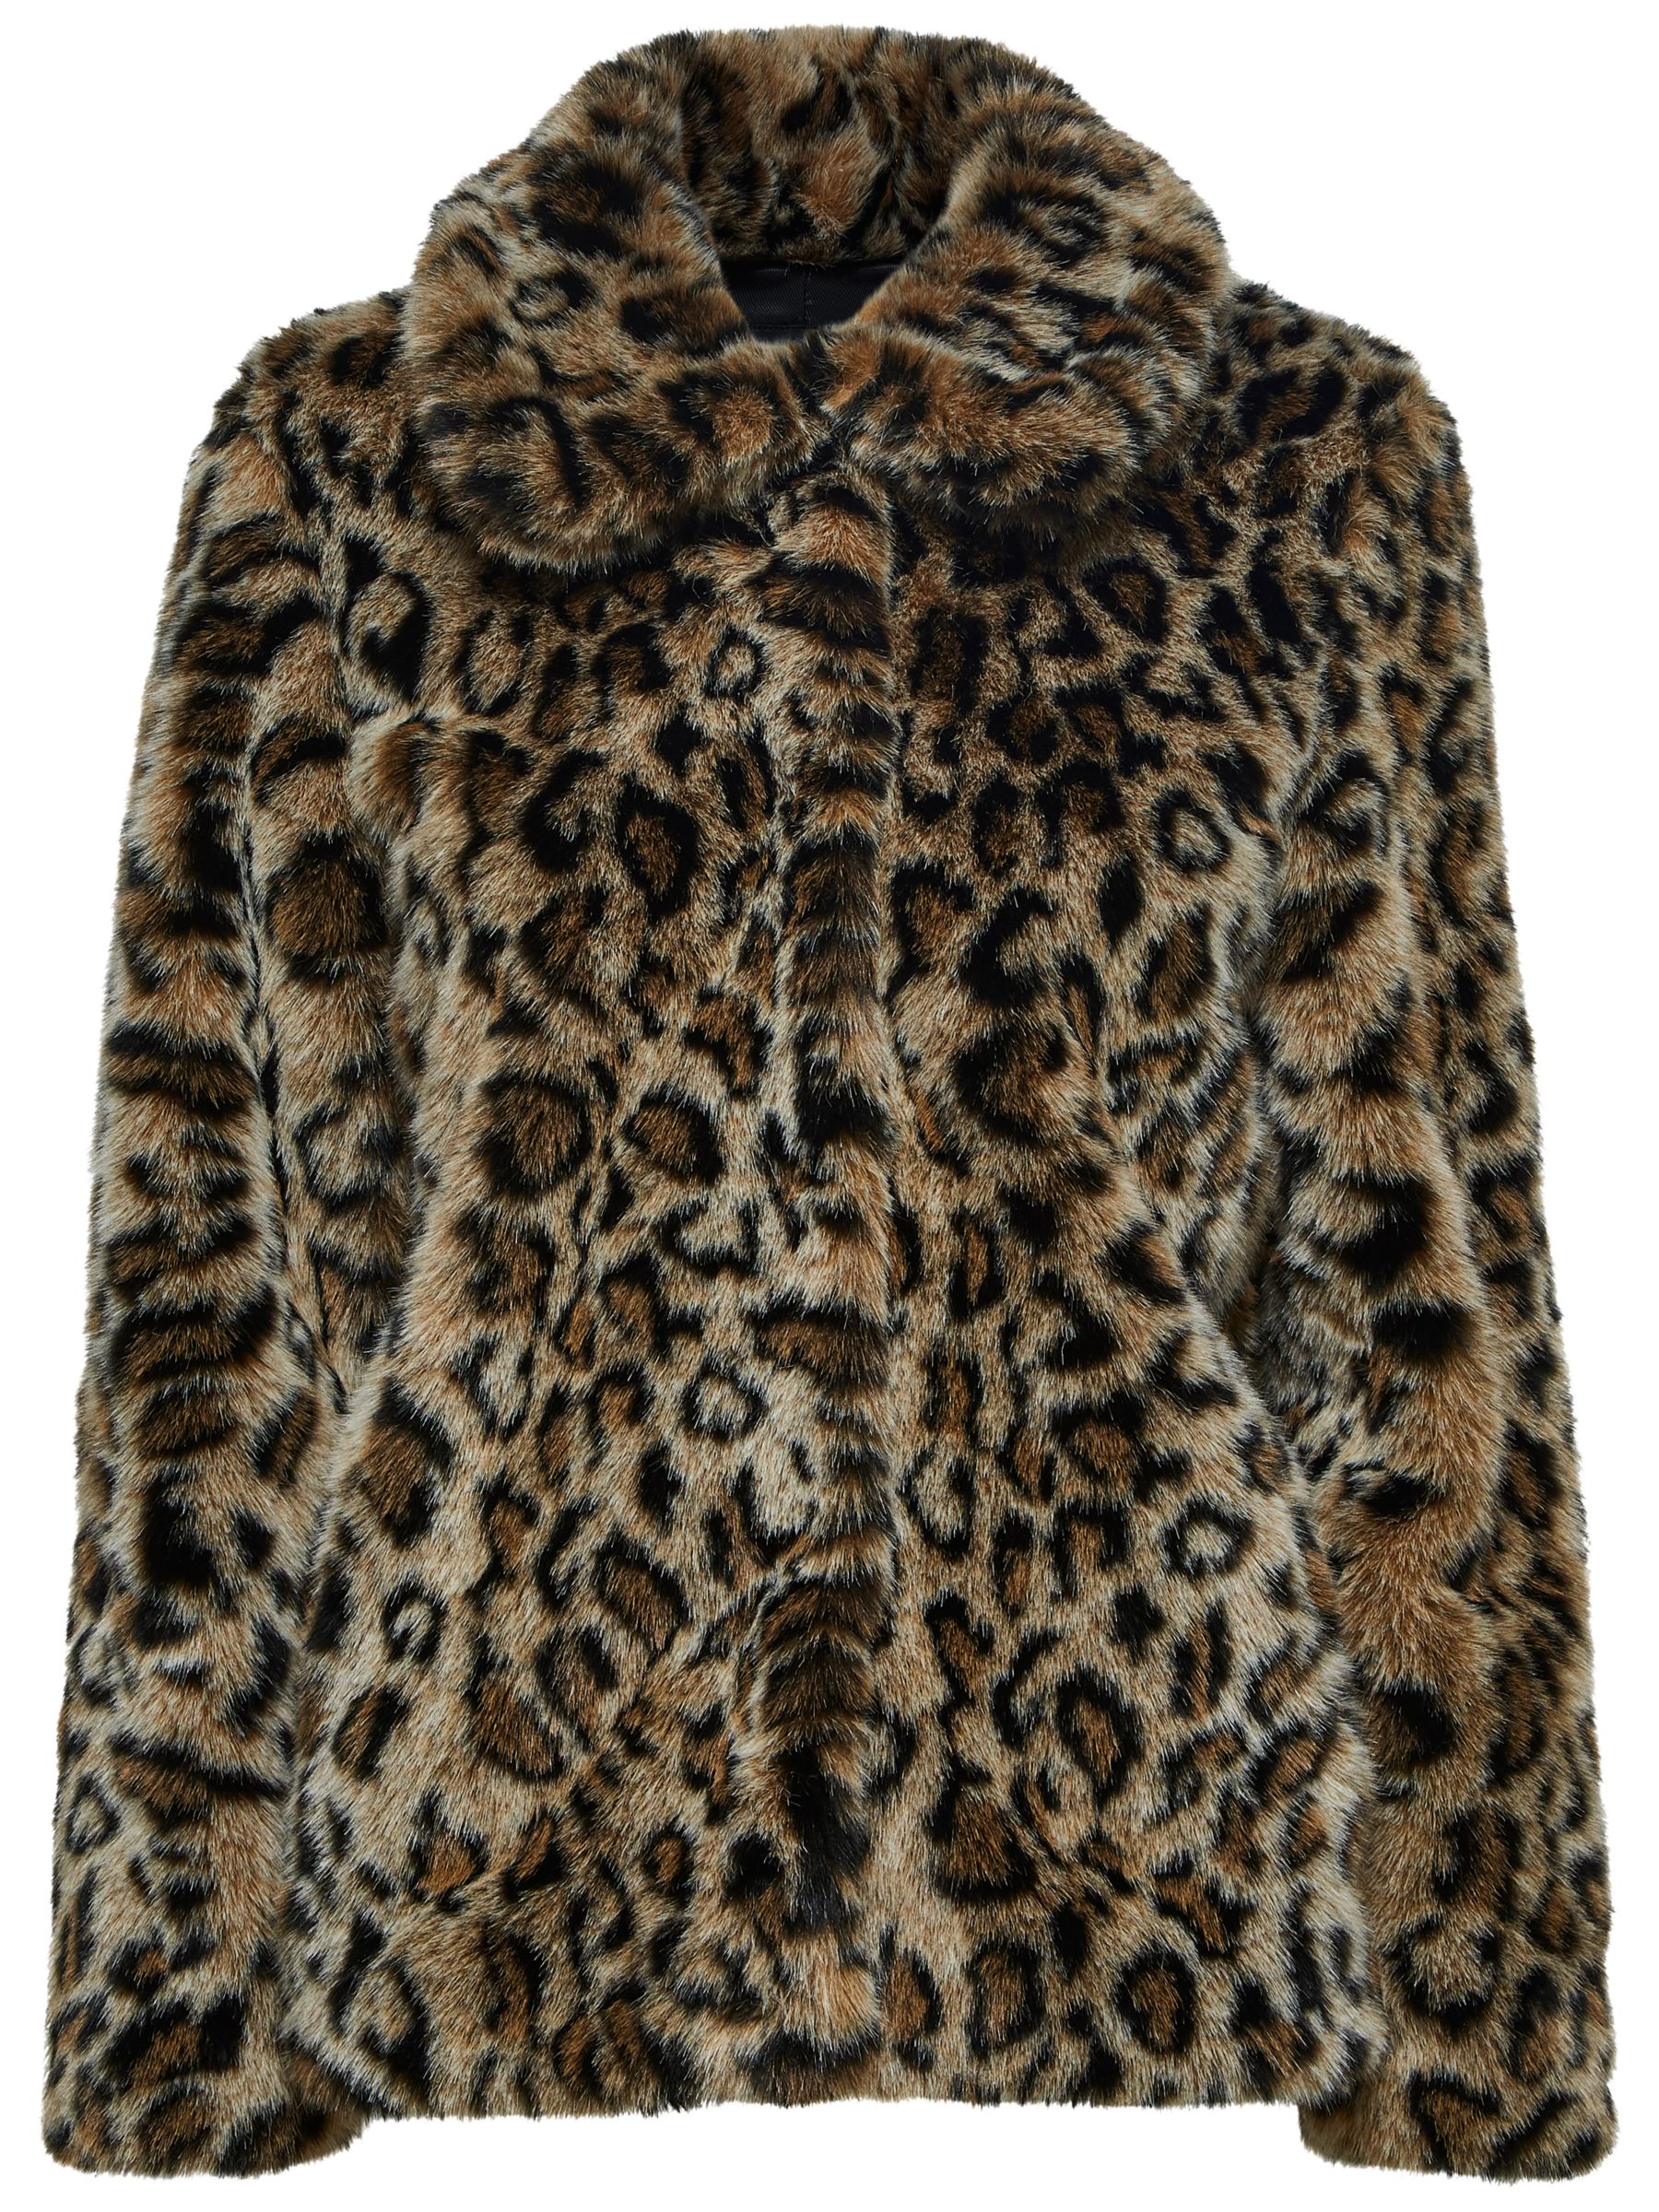 Selected Femme Fur Leopard Print Coat, Leopard